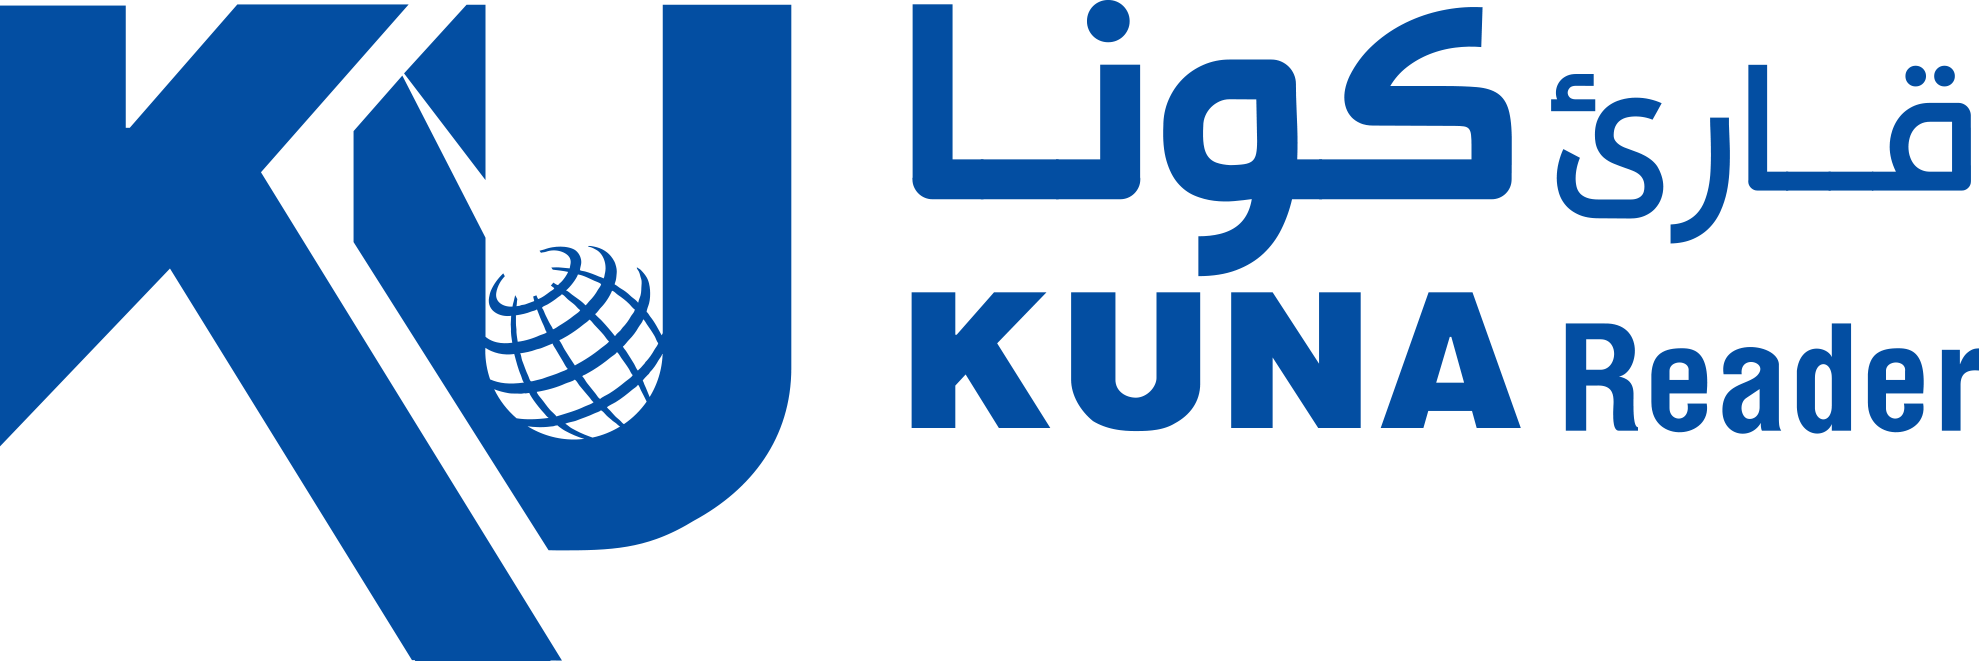 Kuwait Oil Company Logo - KUNA :: Kuwait News Agency - News and Events - Kuwait